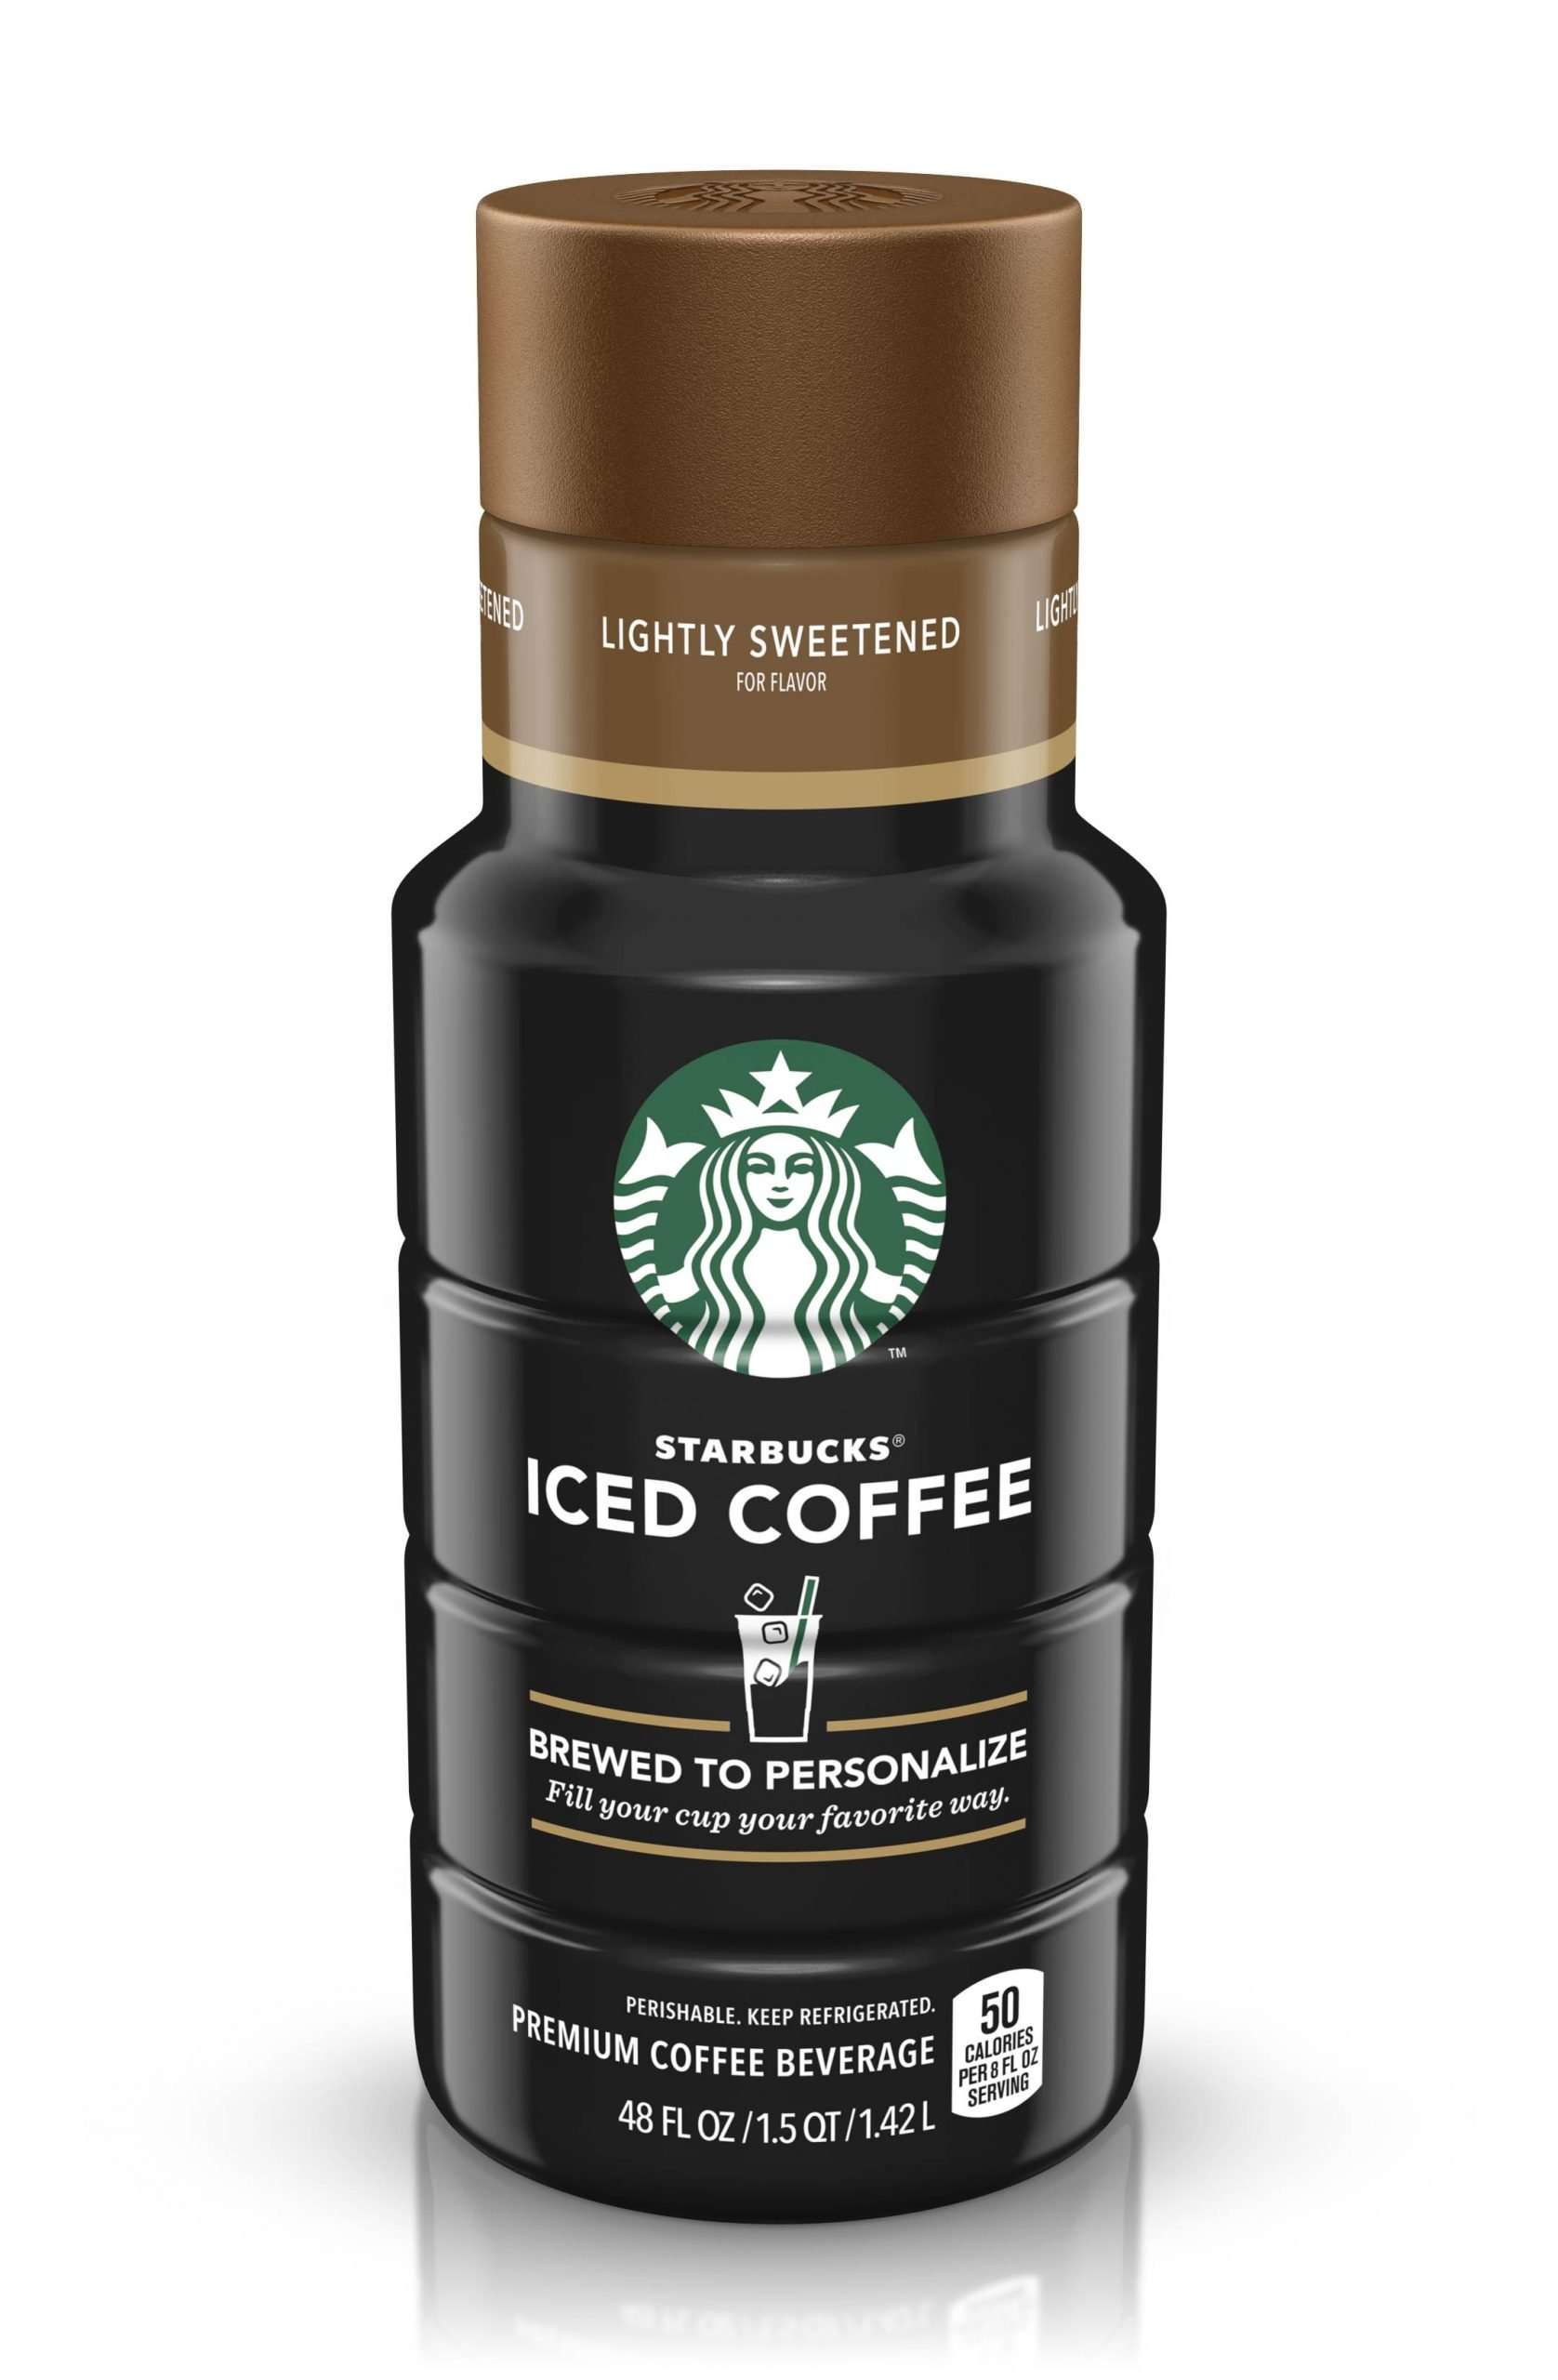 New Starbucks Iced Coffee